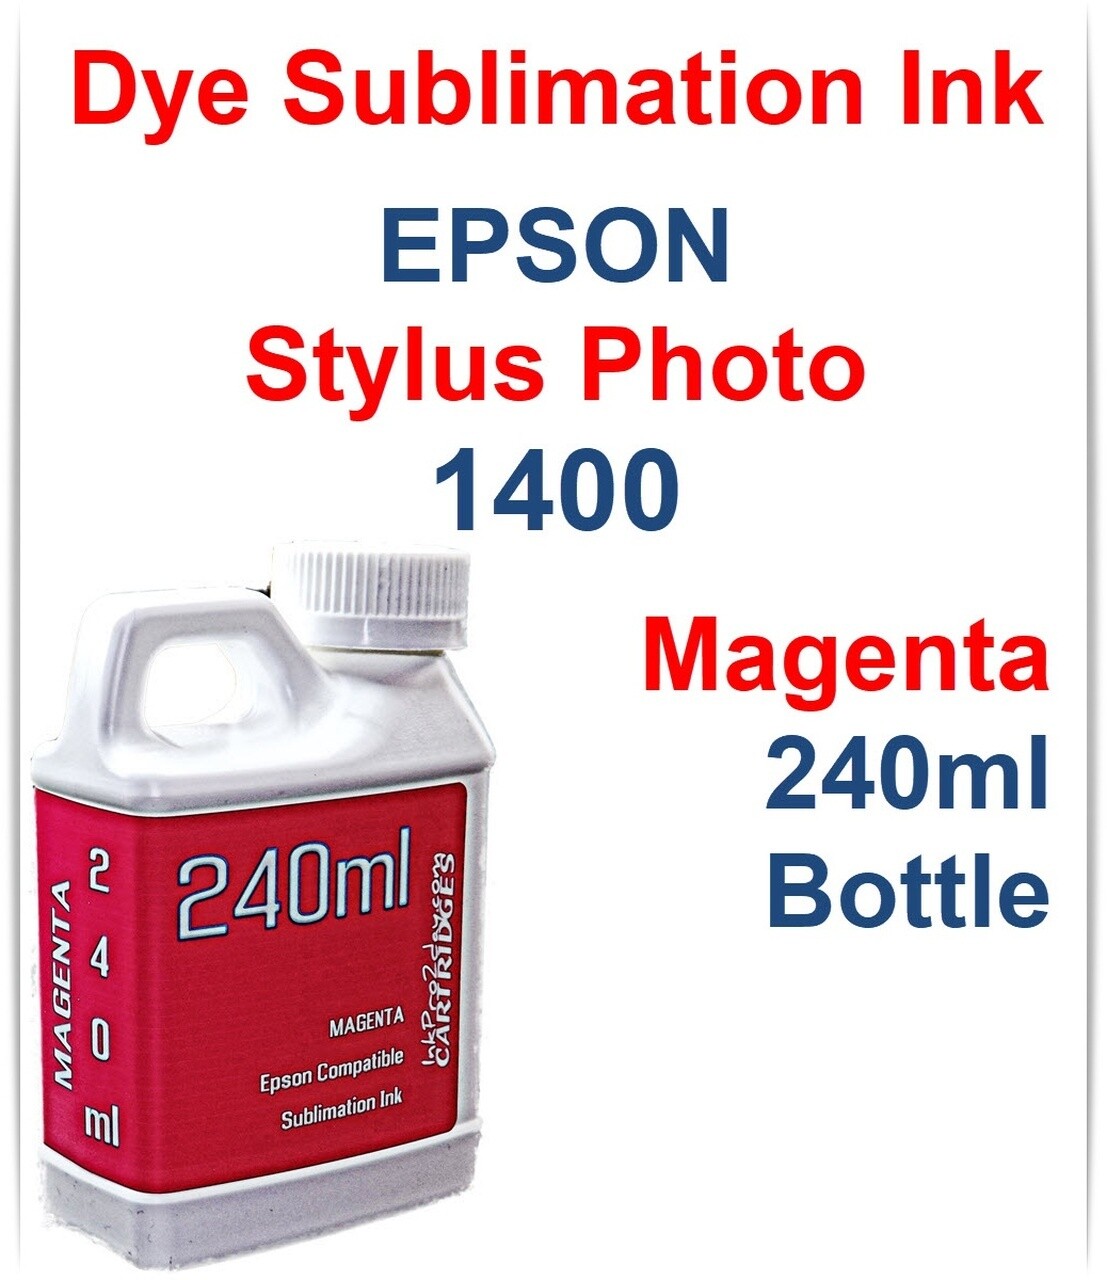 Magenta Dye Sublimation Ink 240ml bottle for Epson Stylus Photo 1400 Printer